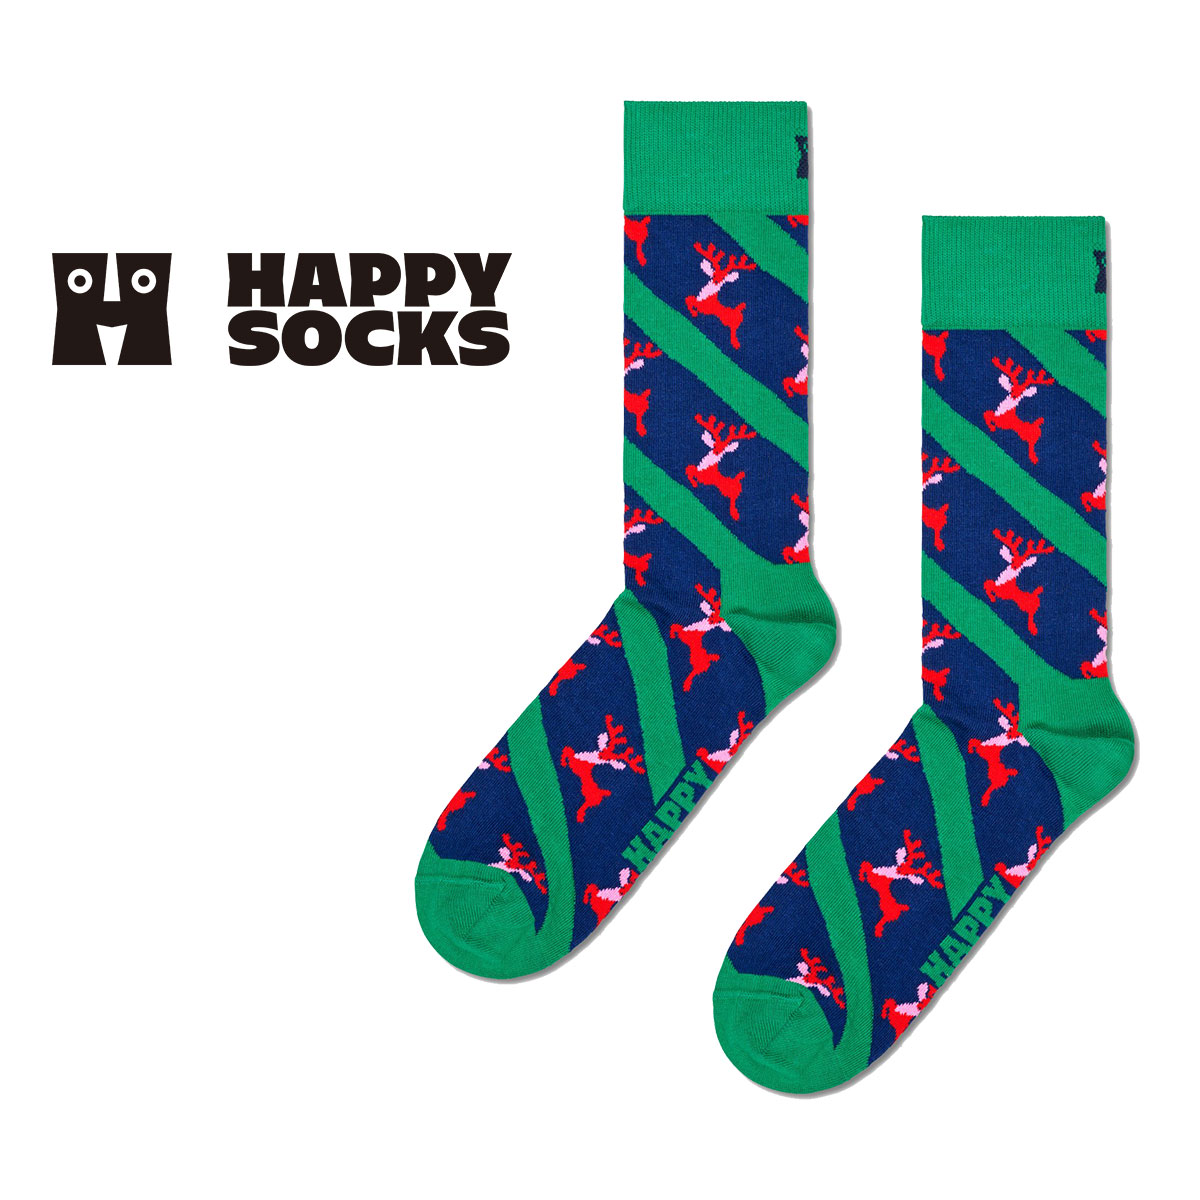 Happy Socks ハッピーソックス Reindeer （ レインディア ）クルー丈 ソックス 靴下 ユニセックス メンズ ＆ レディース